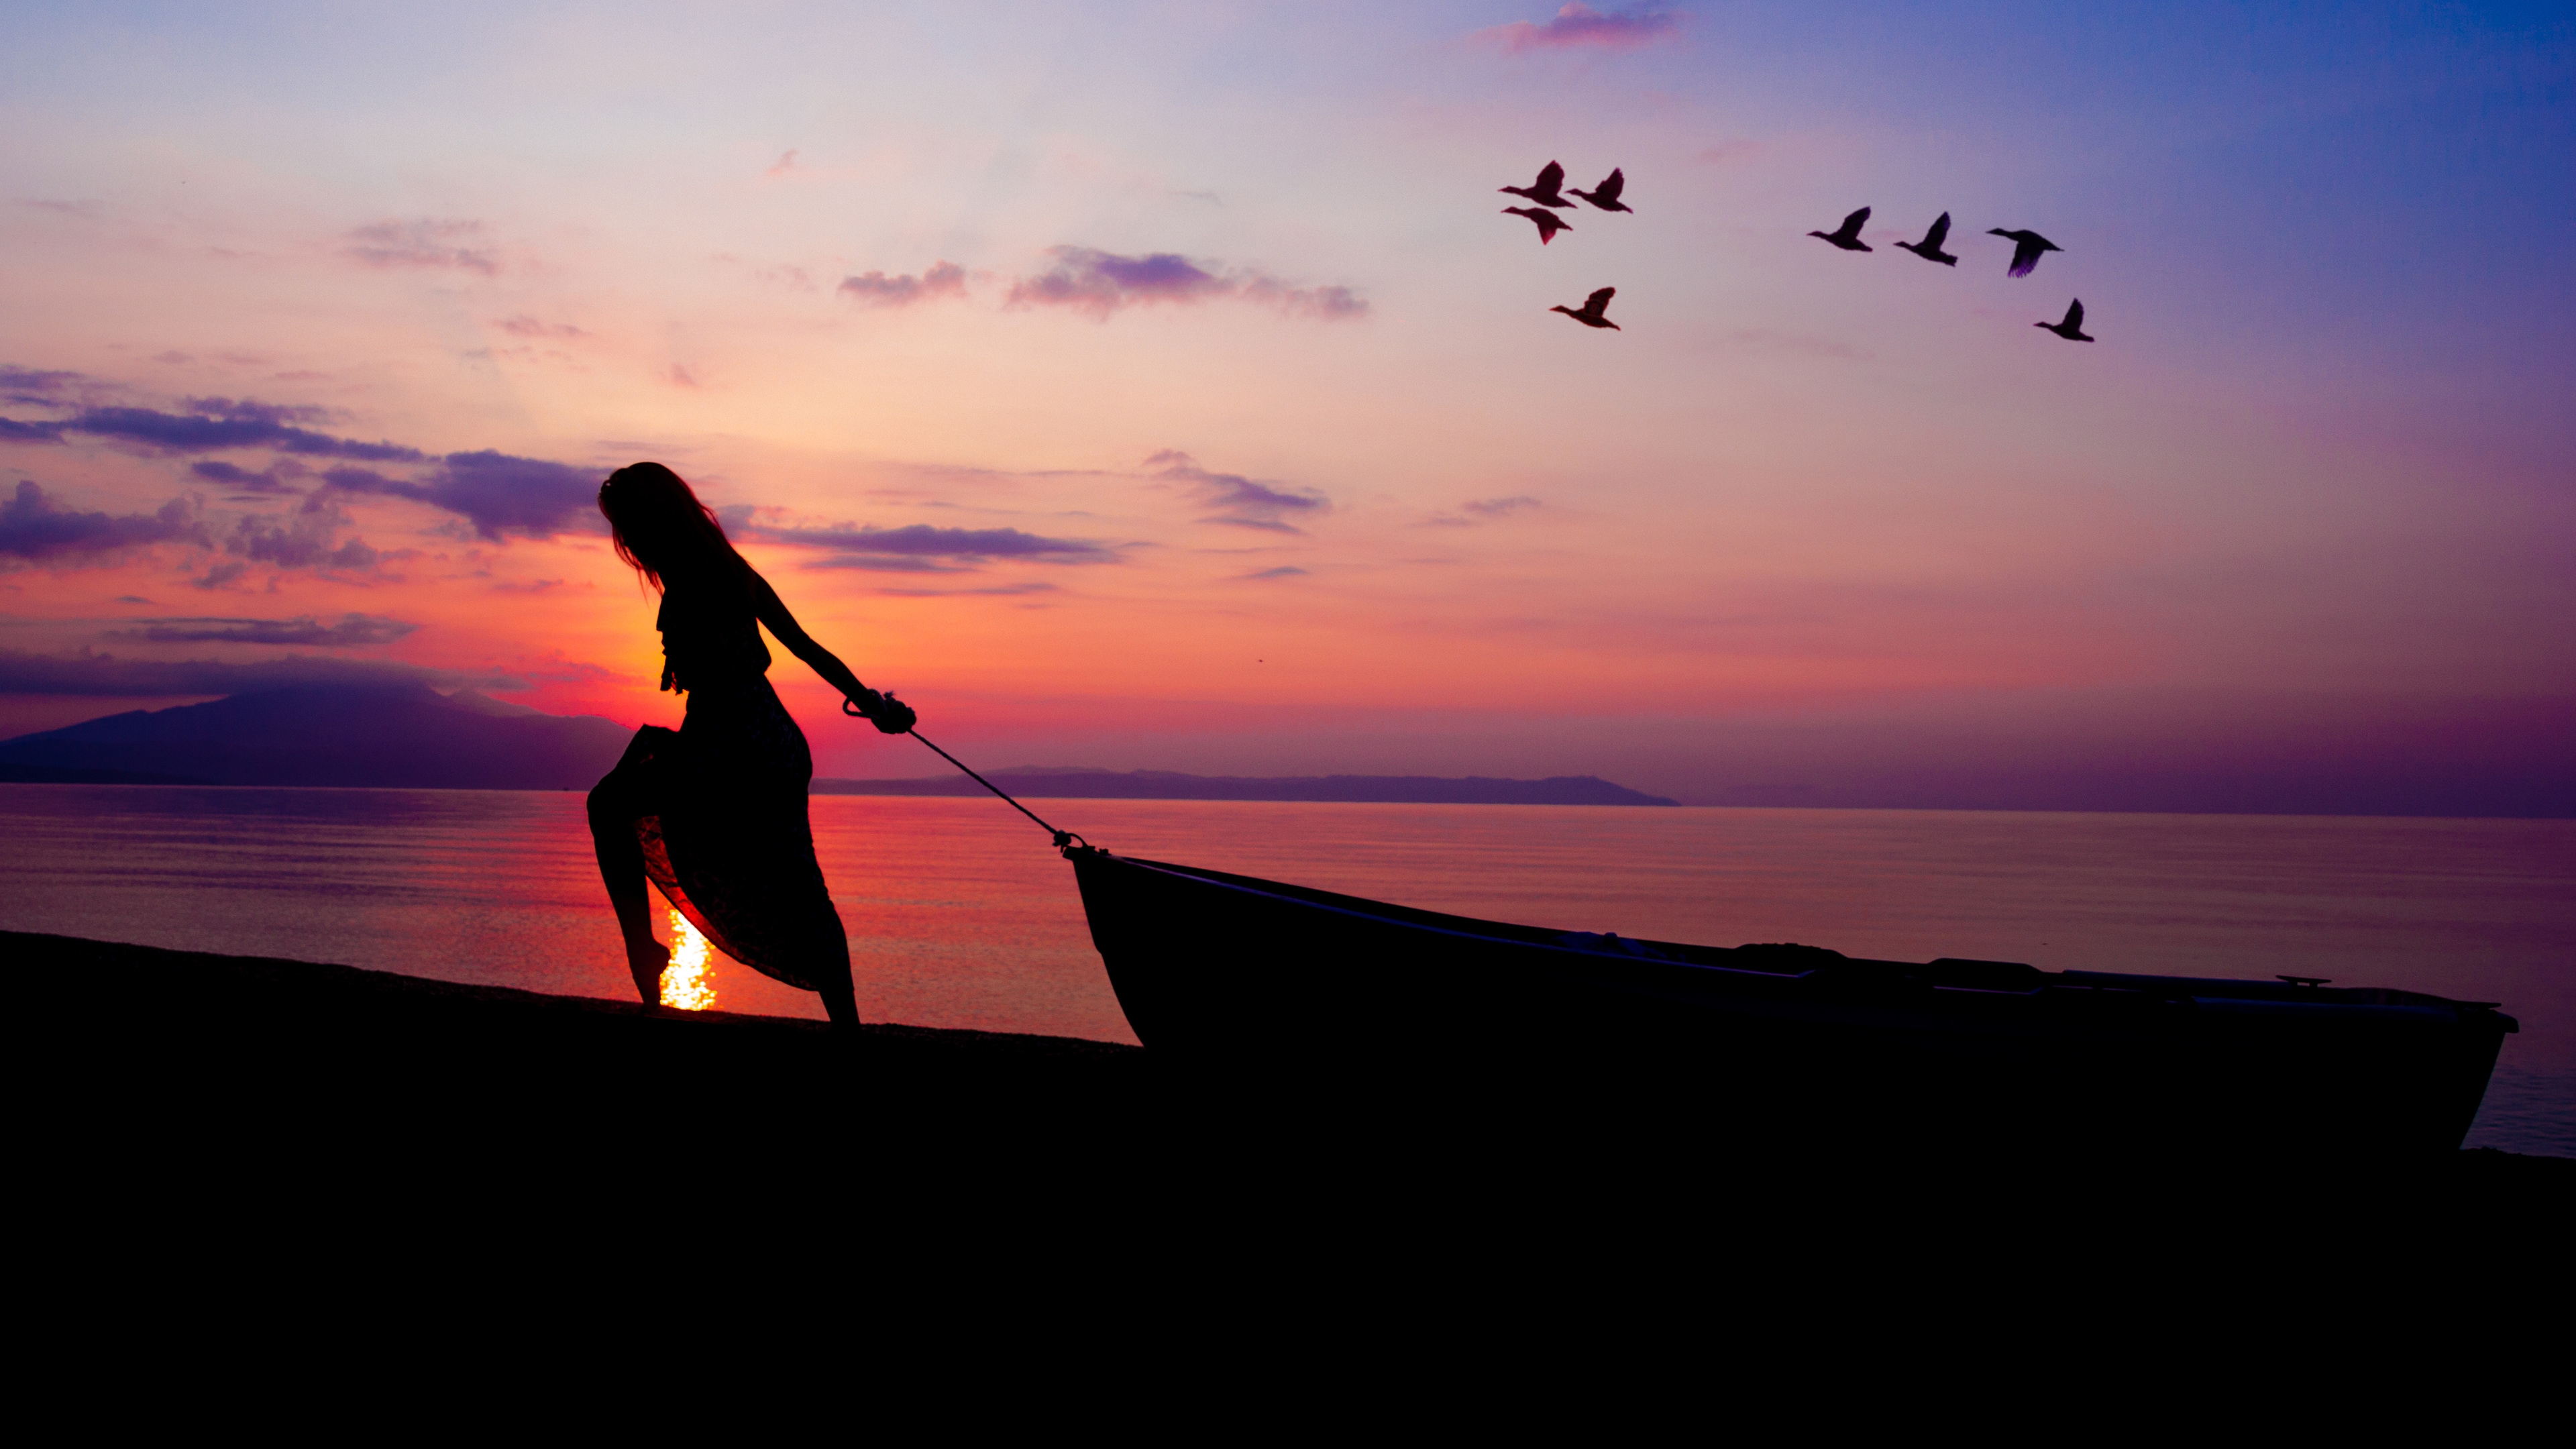 Women Towing Boat Beach Sunset Silhouette 4k - صور عشاطي وقت الغروب - HD Wallpaper 